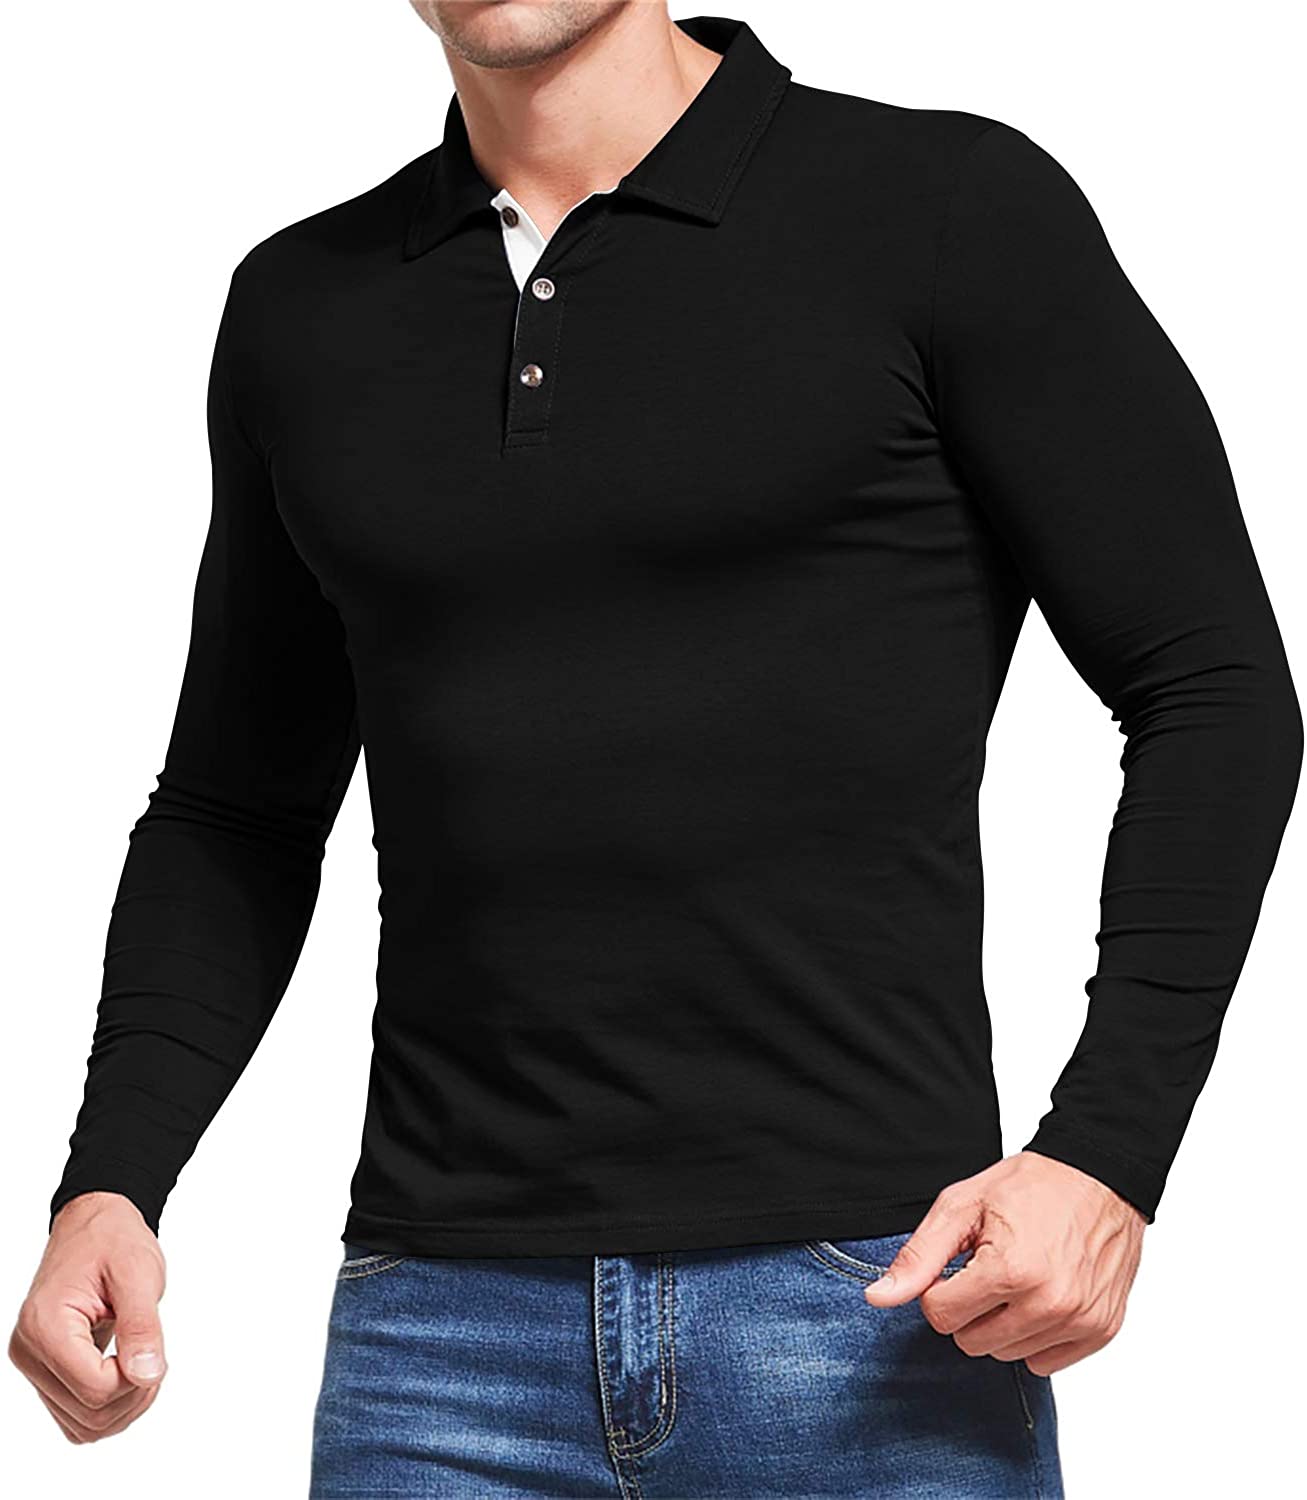 Aiyino Men's Long Sleeve Polo Shirts Casual Slim Fit Basic Designed Cotton Shirts - image 3 of 3